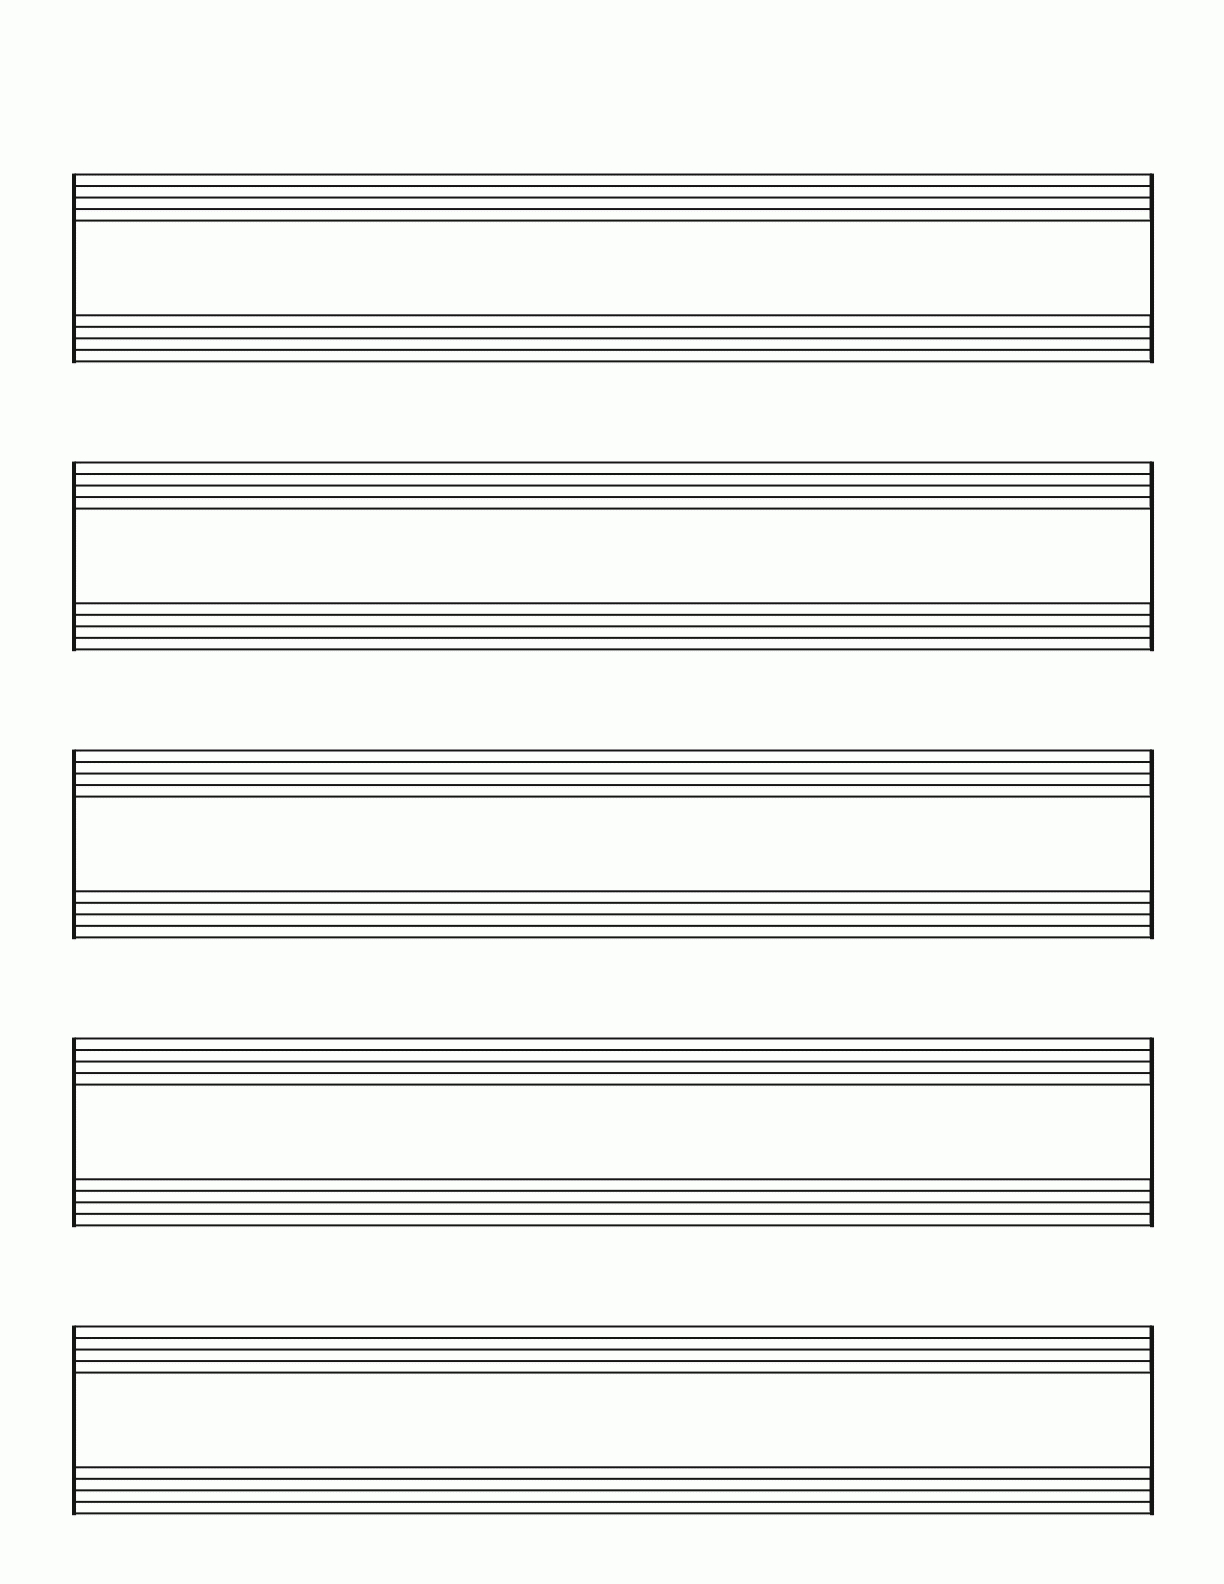 Free Sheet Music Images, Download Free Clip Art, Free Clip With Blank Sheet Music Template For Word